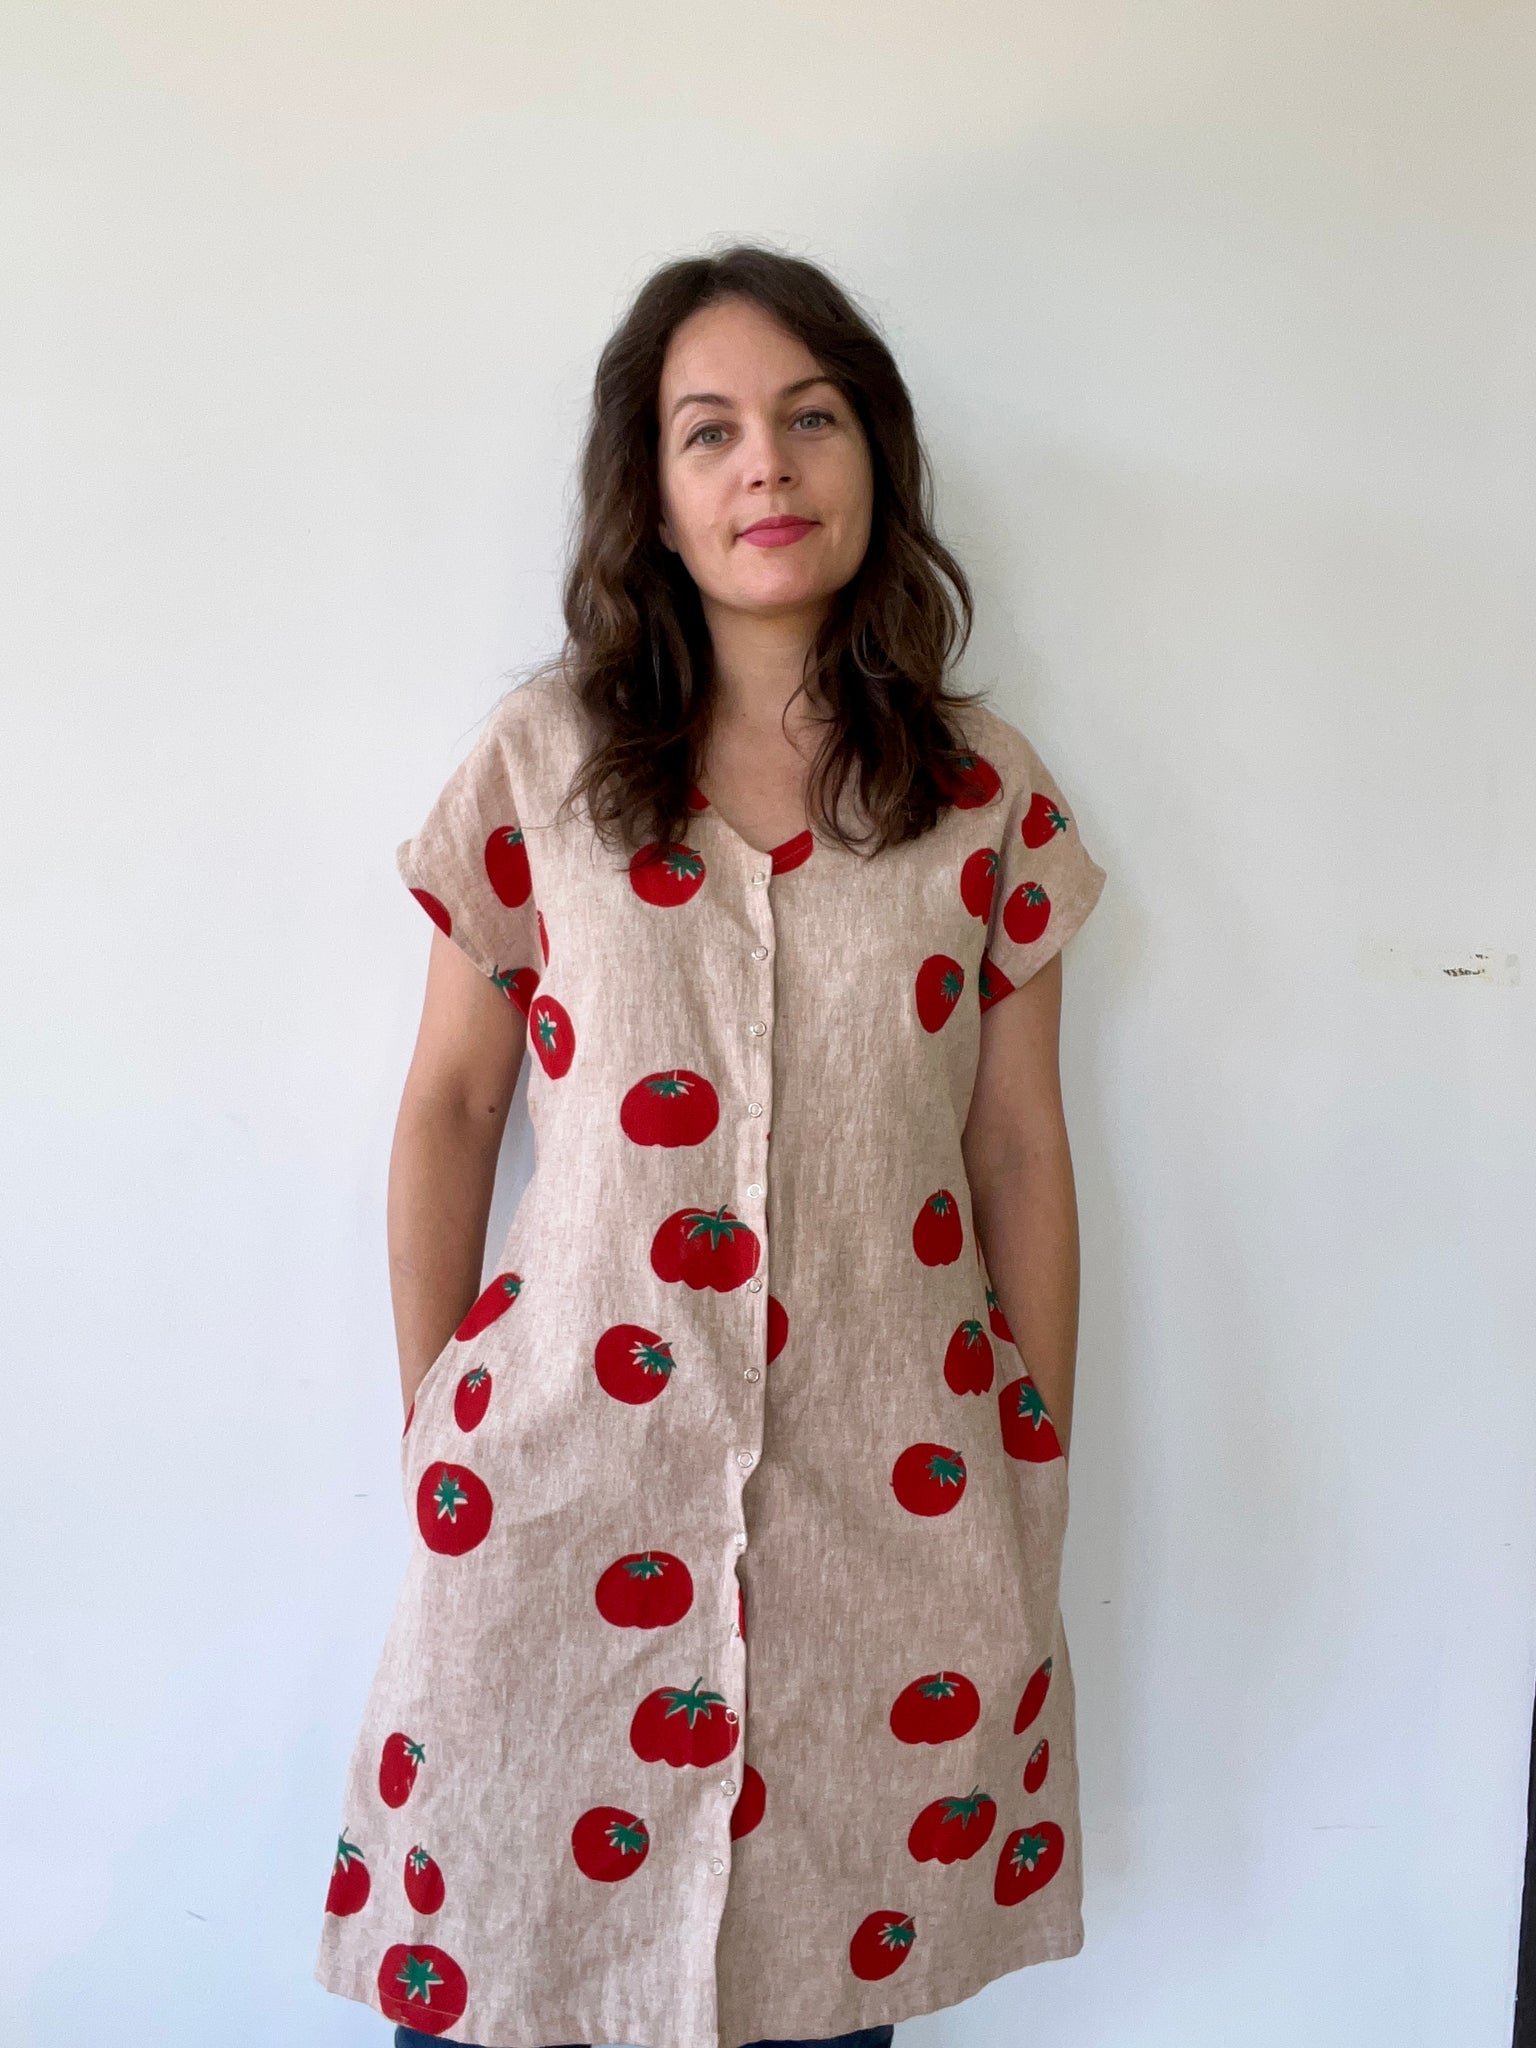 OOAK tomato print linen blend snap dress